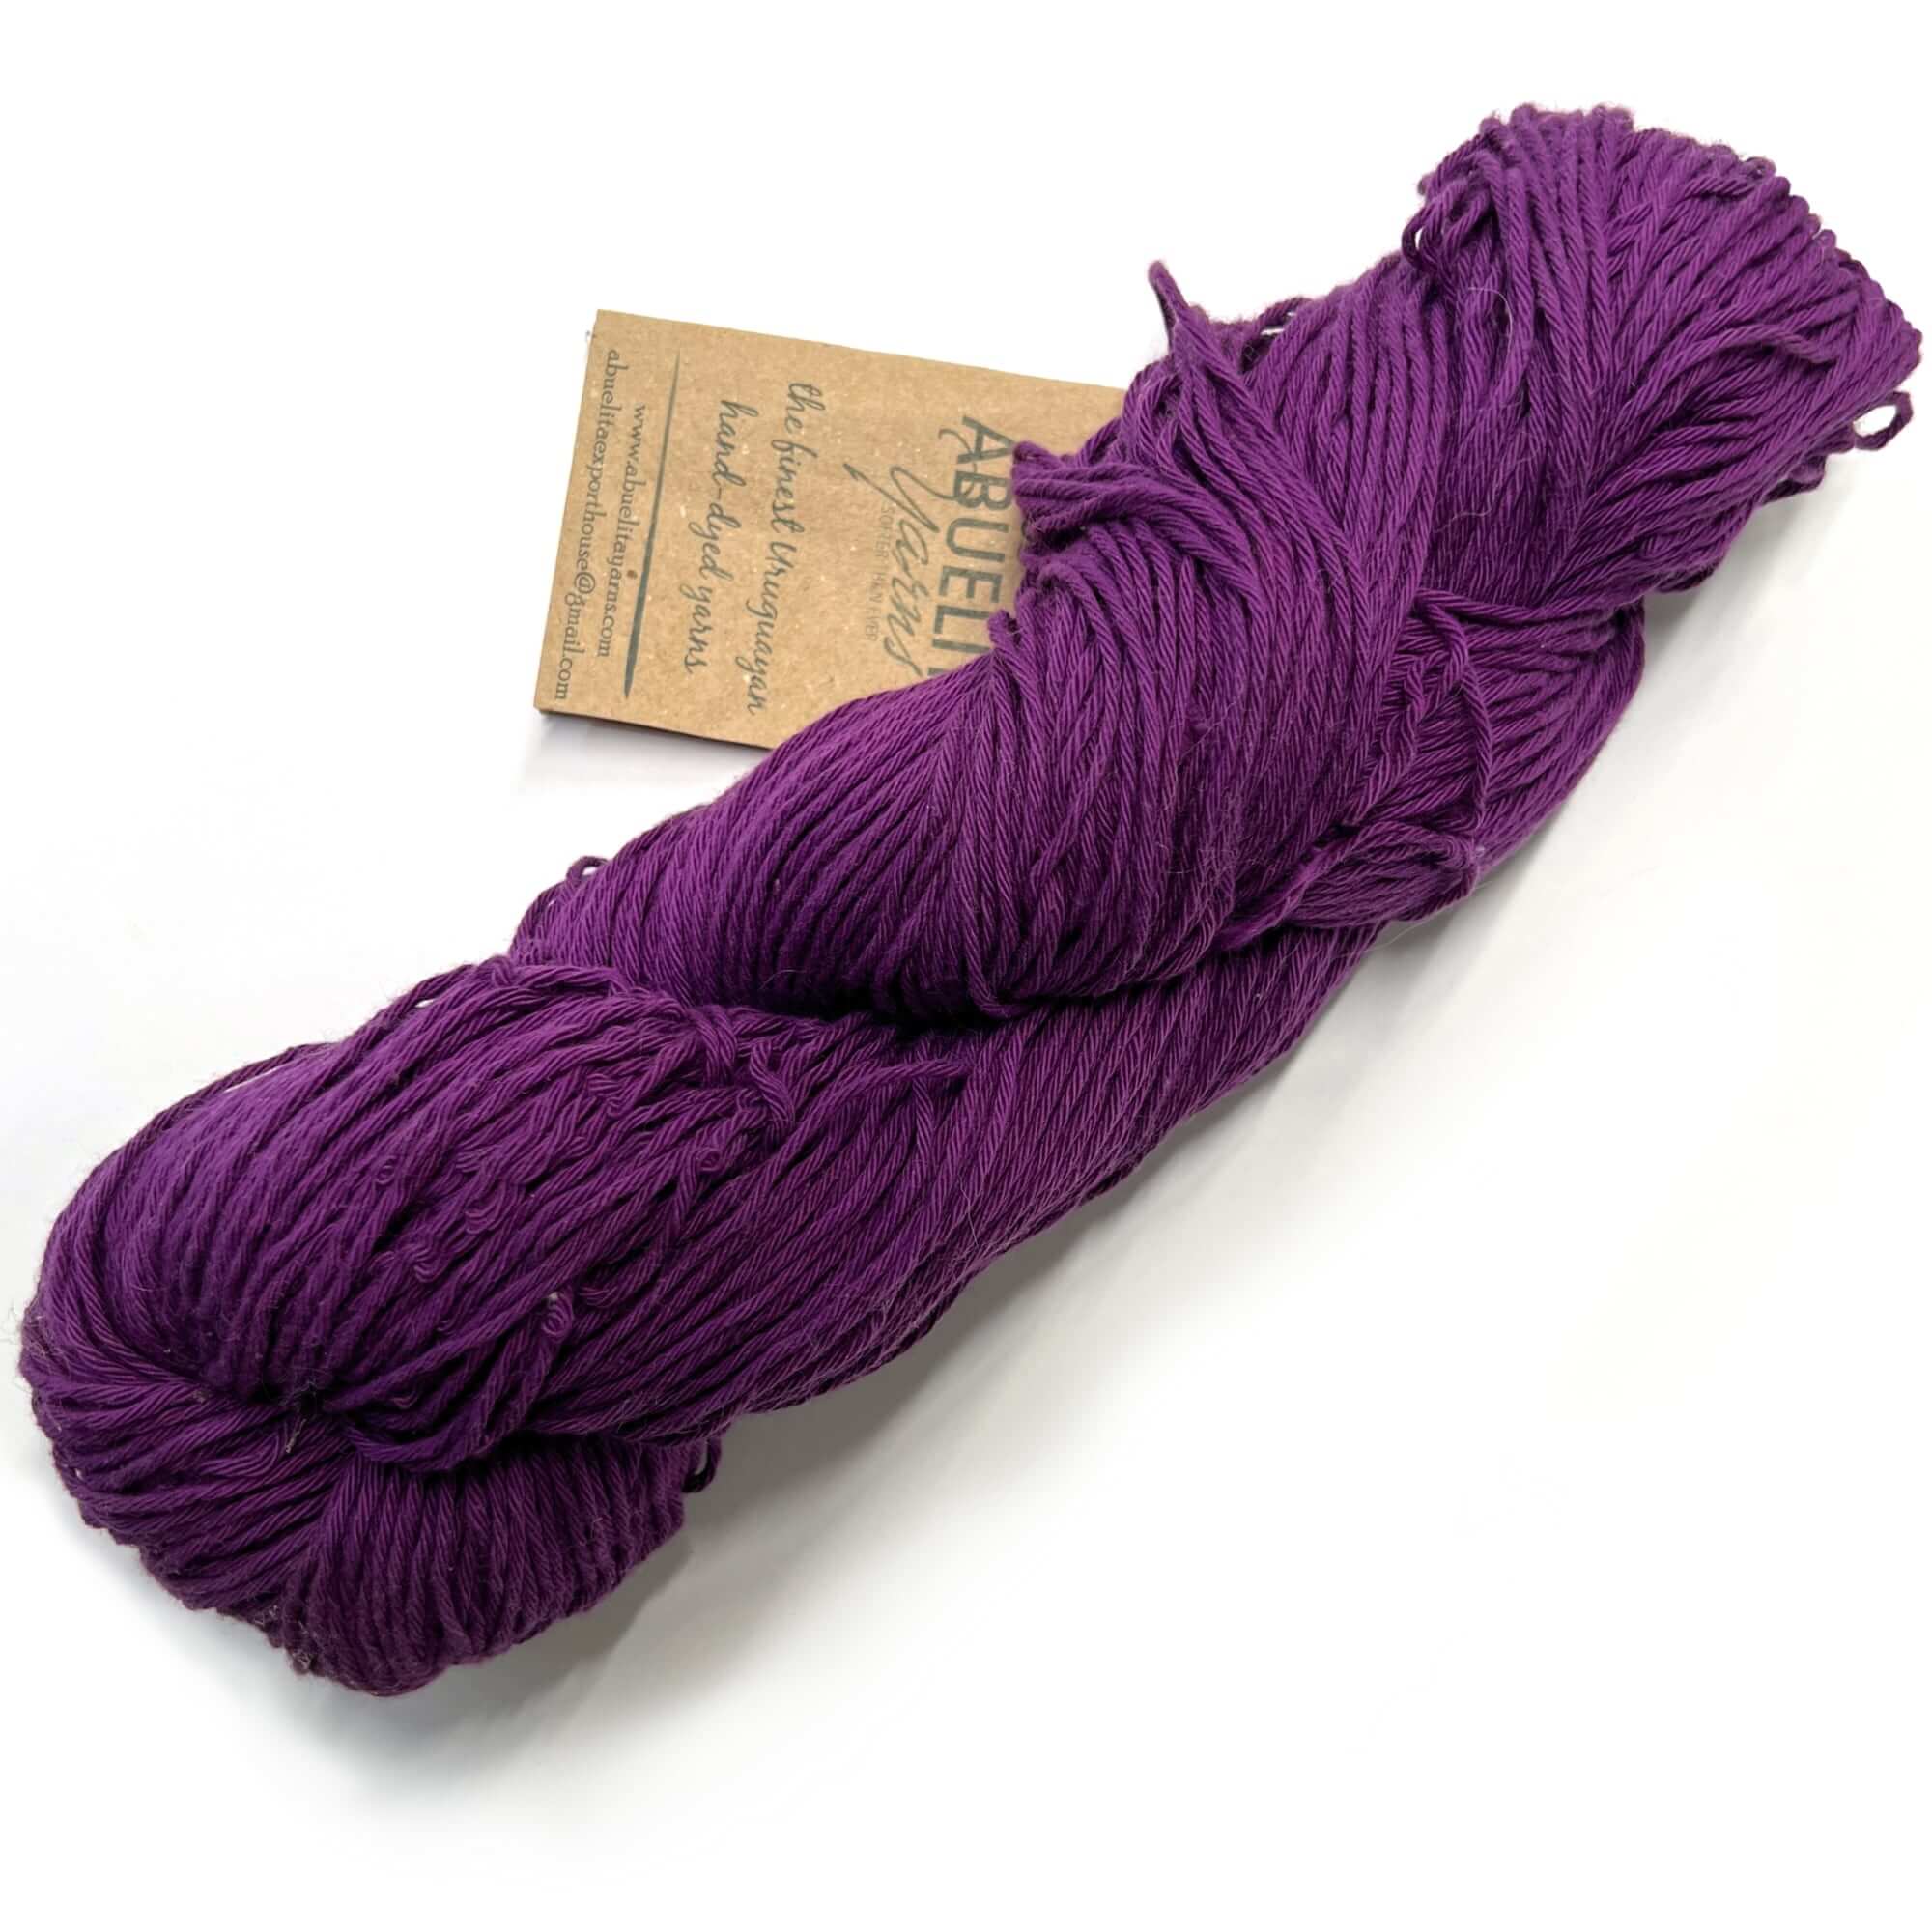 DK Pima Cotton Yarn by Abuelita Yarns, Fair Trade Hand Dyed Yarn Smooth Loosely Plied Cotton Yarn Dark Purple